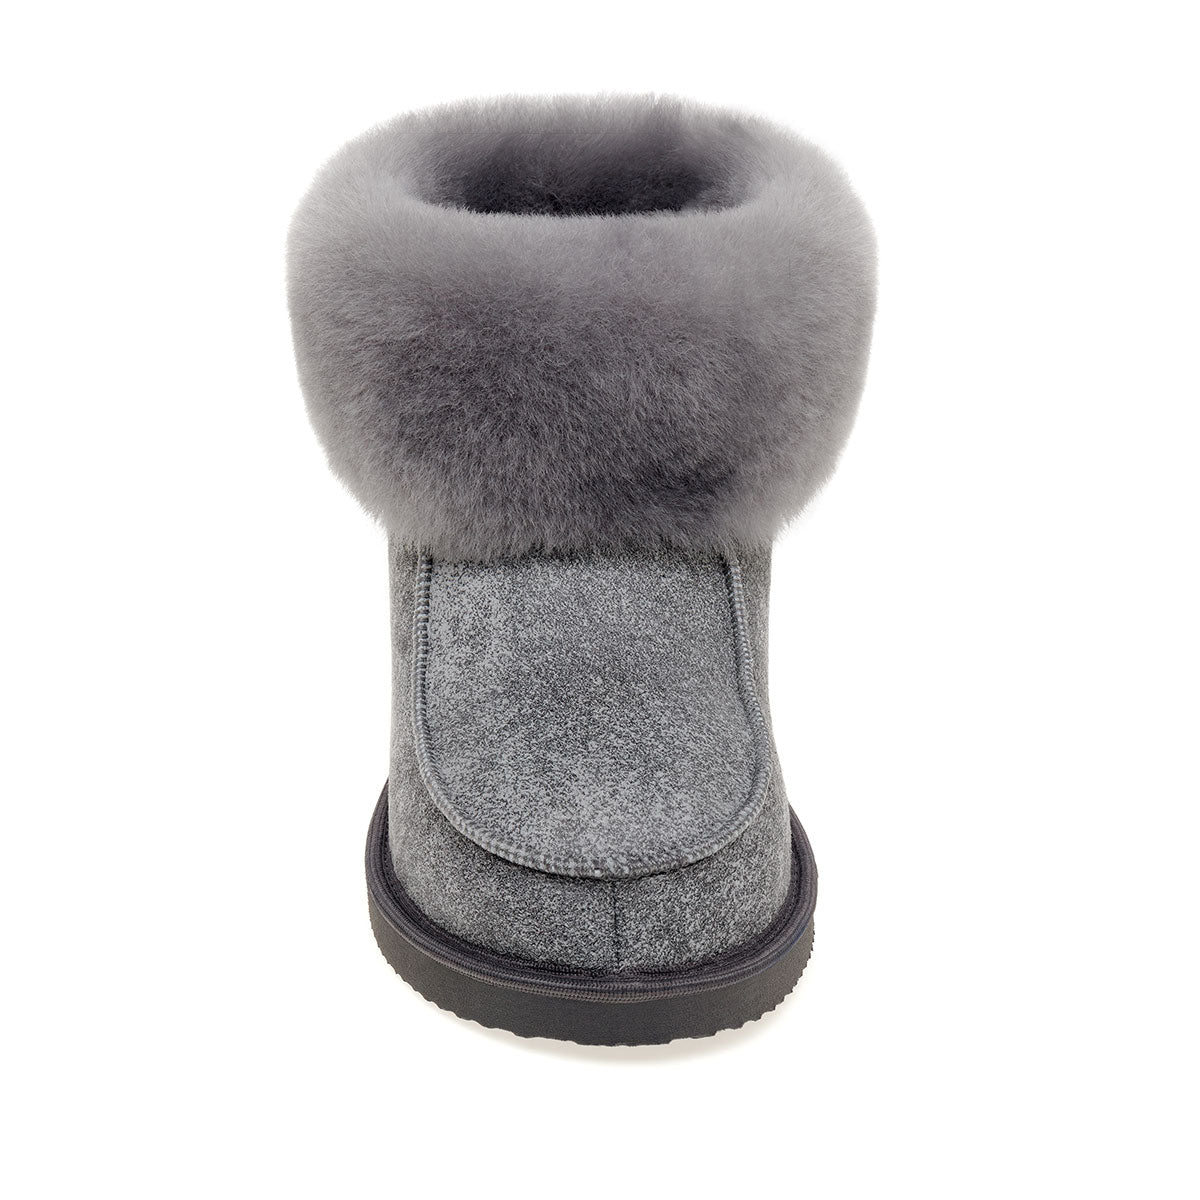 Aesop Sheepskin Slippers - Grey Distressed Leather